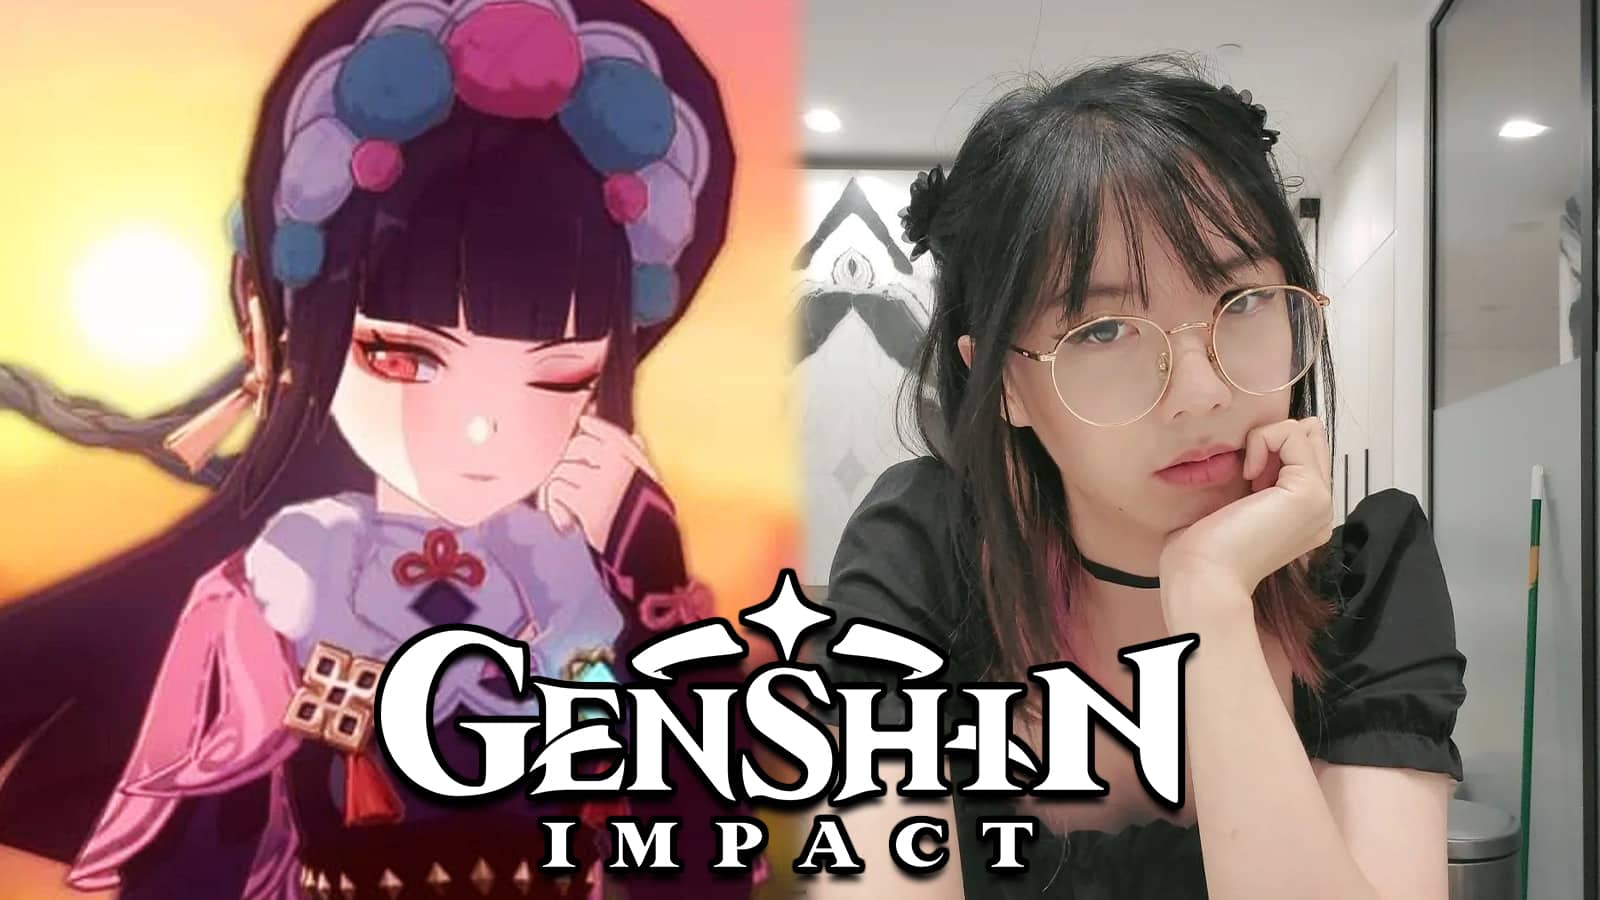 Genshin Impact hero Yun Jin next to Twitch streamer LilyPichu